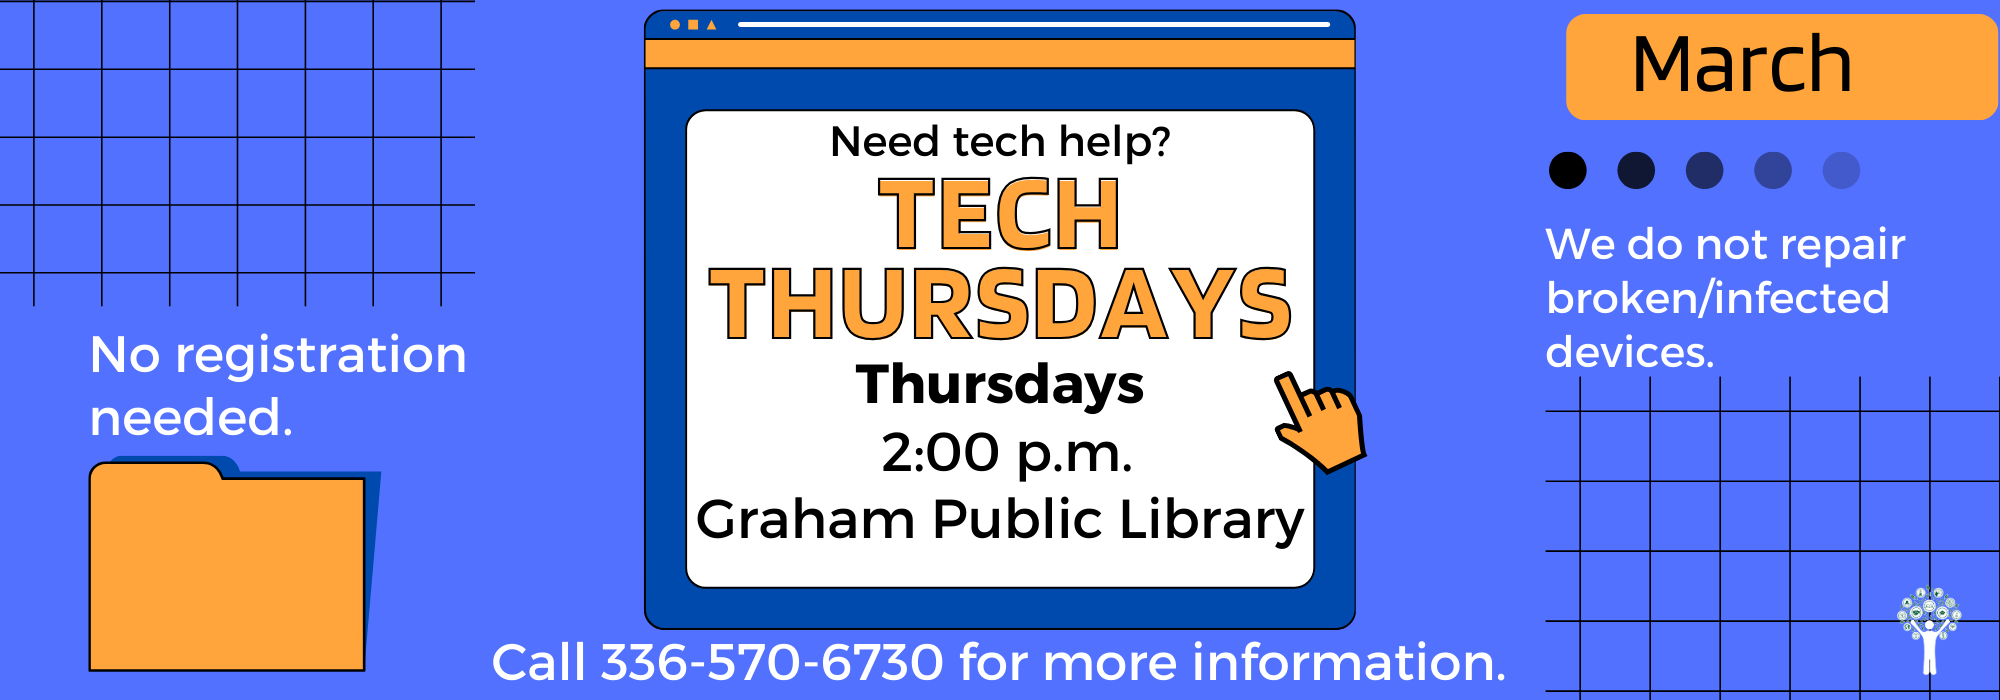 March - Tech Tuesdays at Graham